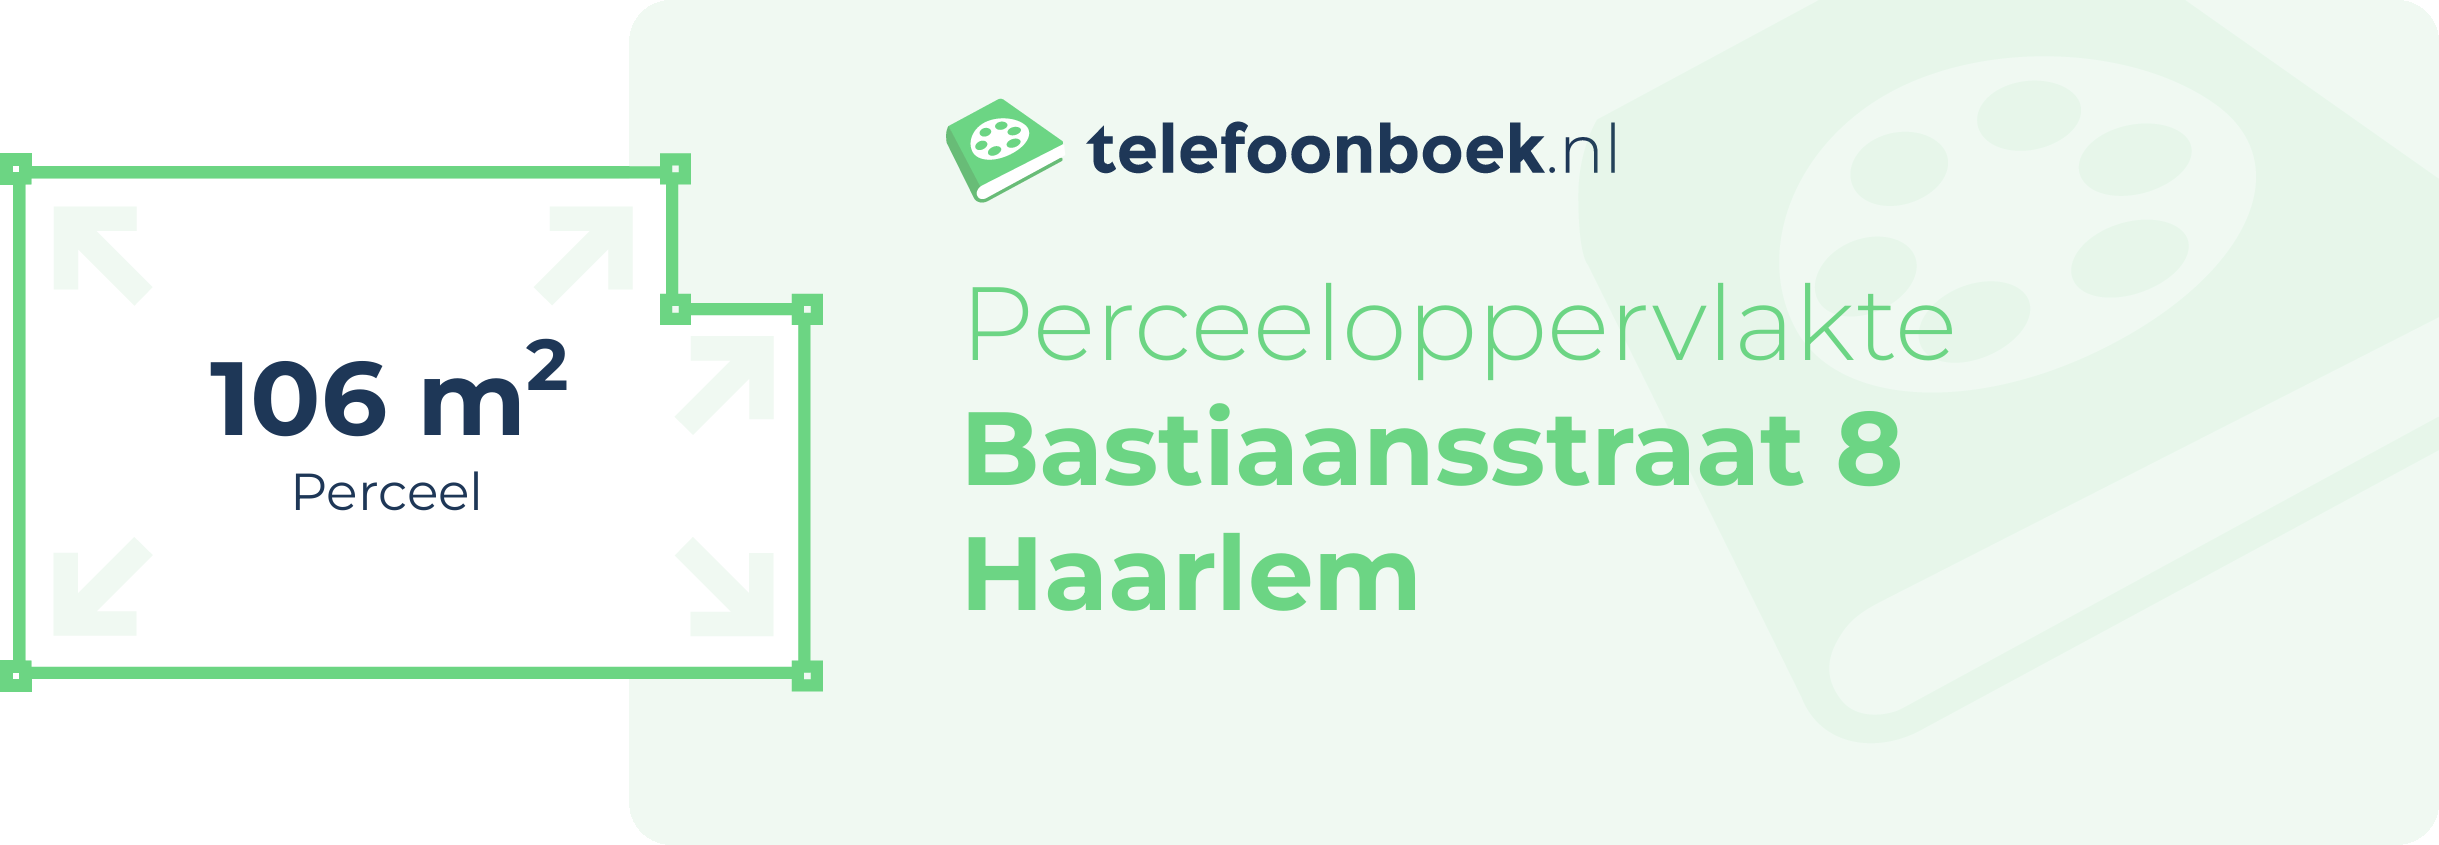 Perceeloppervlakte Bastiaansstraat 8 Haarlem